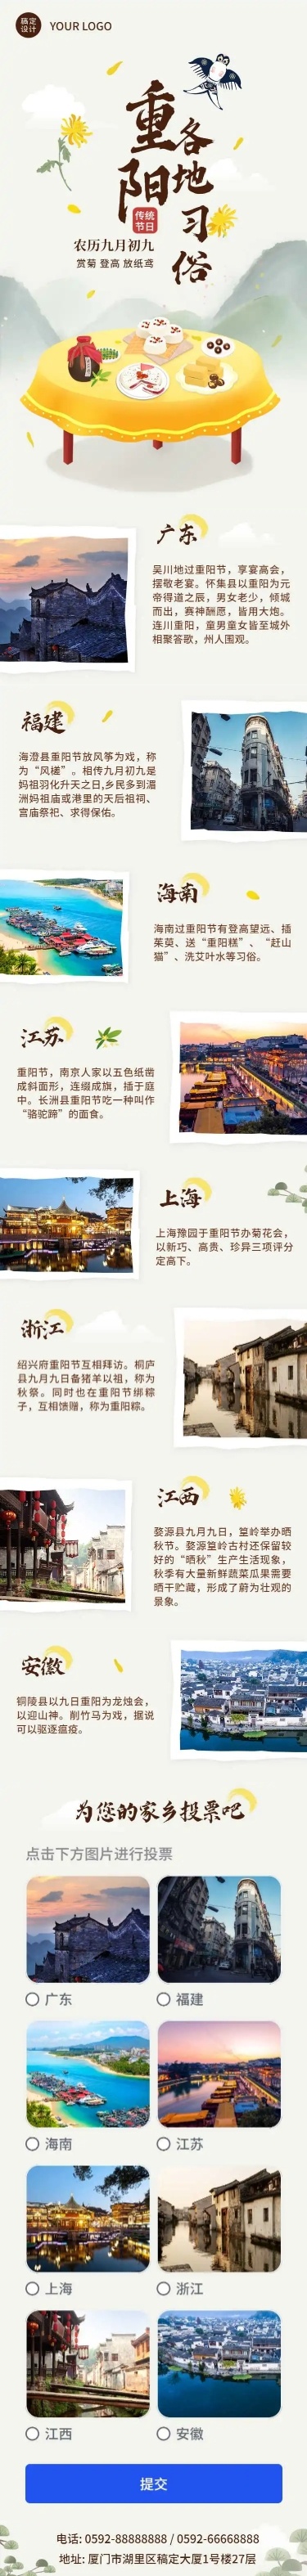 H5长页中国风重阳节节日习俗科普宣传文章